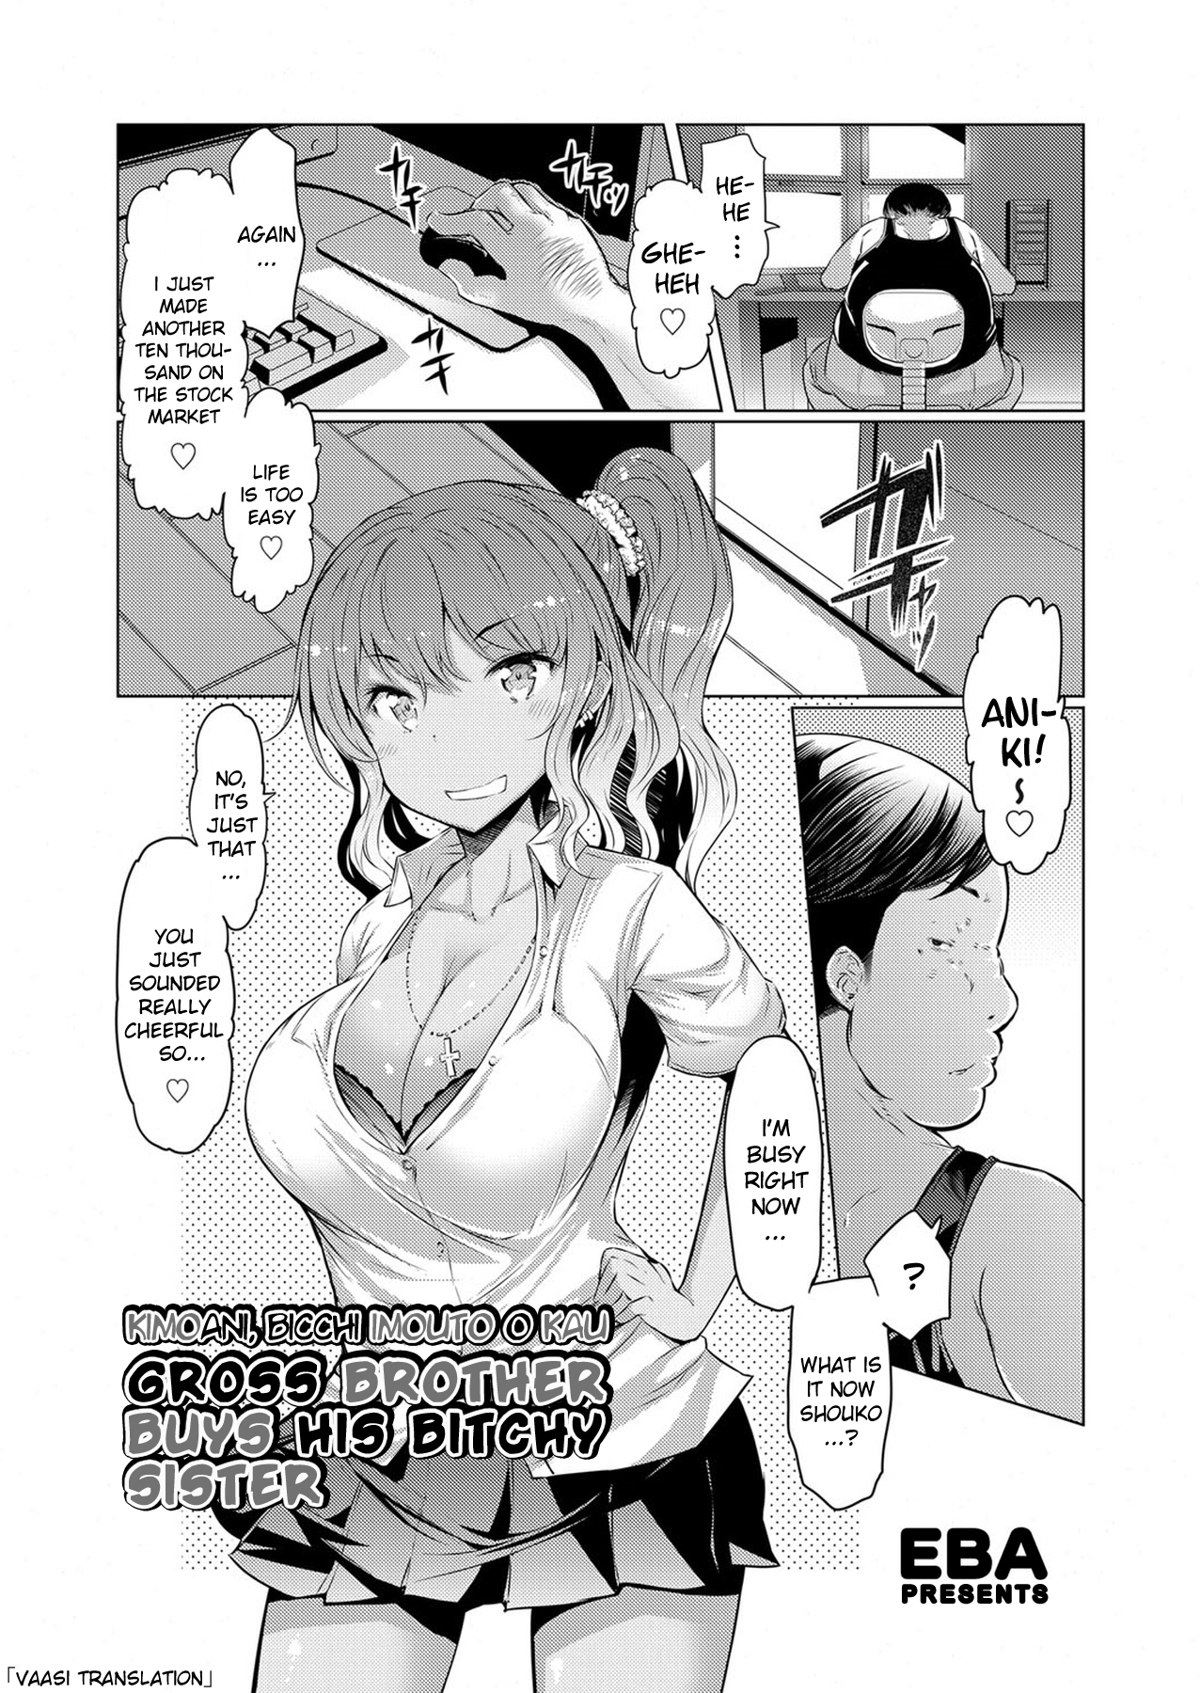 Manga Blowjob - Read blowjob Porn comics Â» Page 4606 of 4830 Â» Hentai porns - Manga and  porncomics xxx 4606 hentai comics